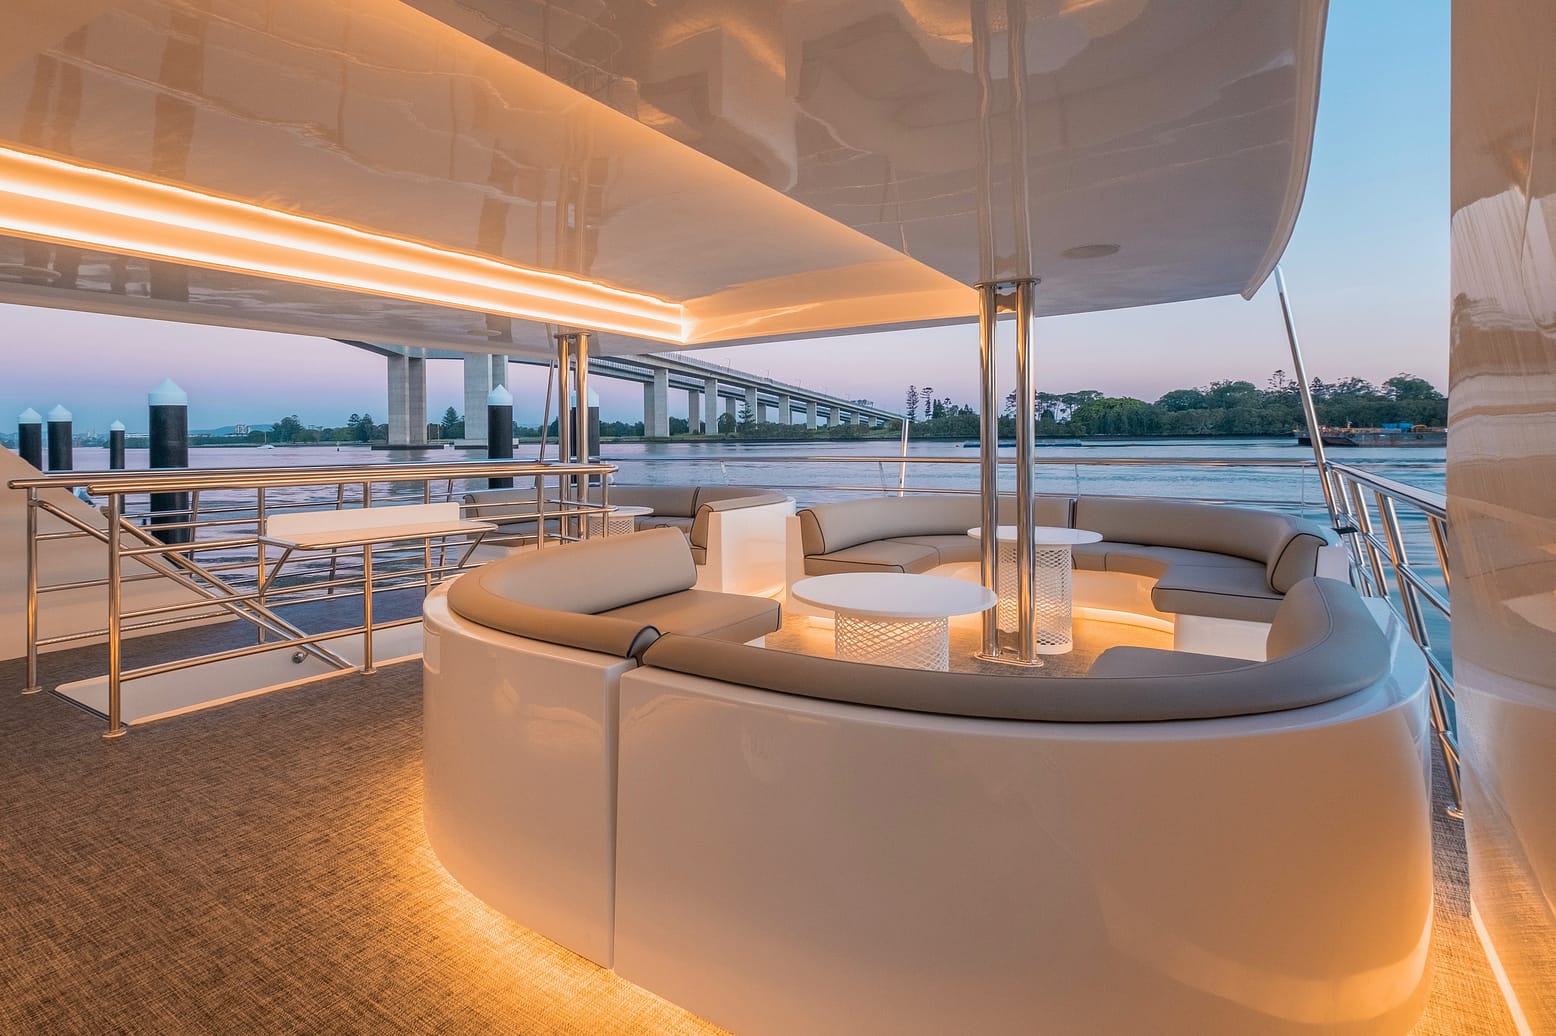 luxury passenger ferry seating 2019 exterior